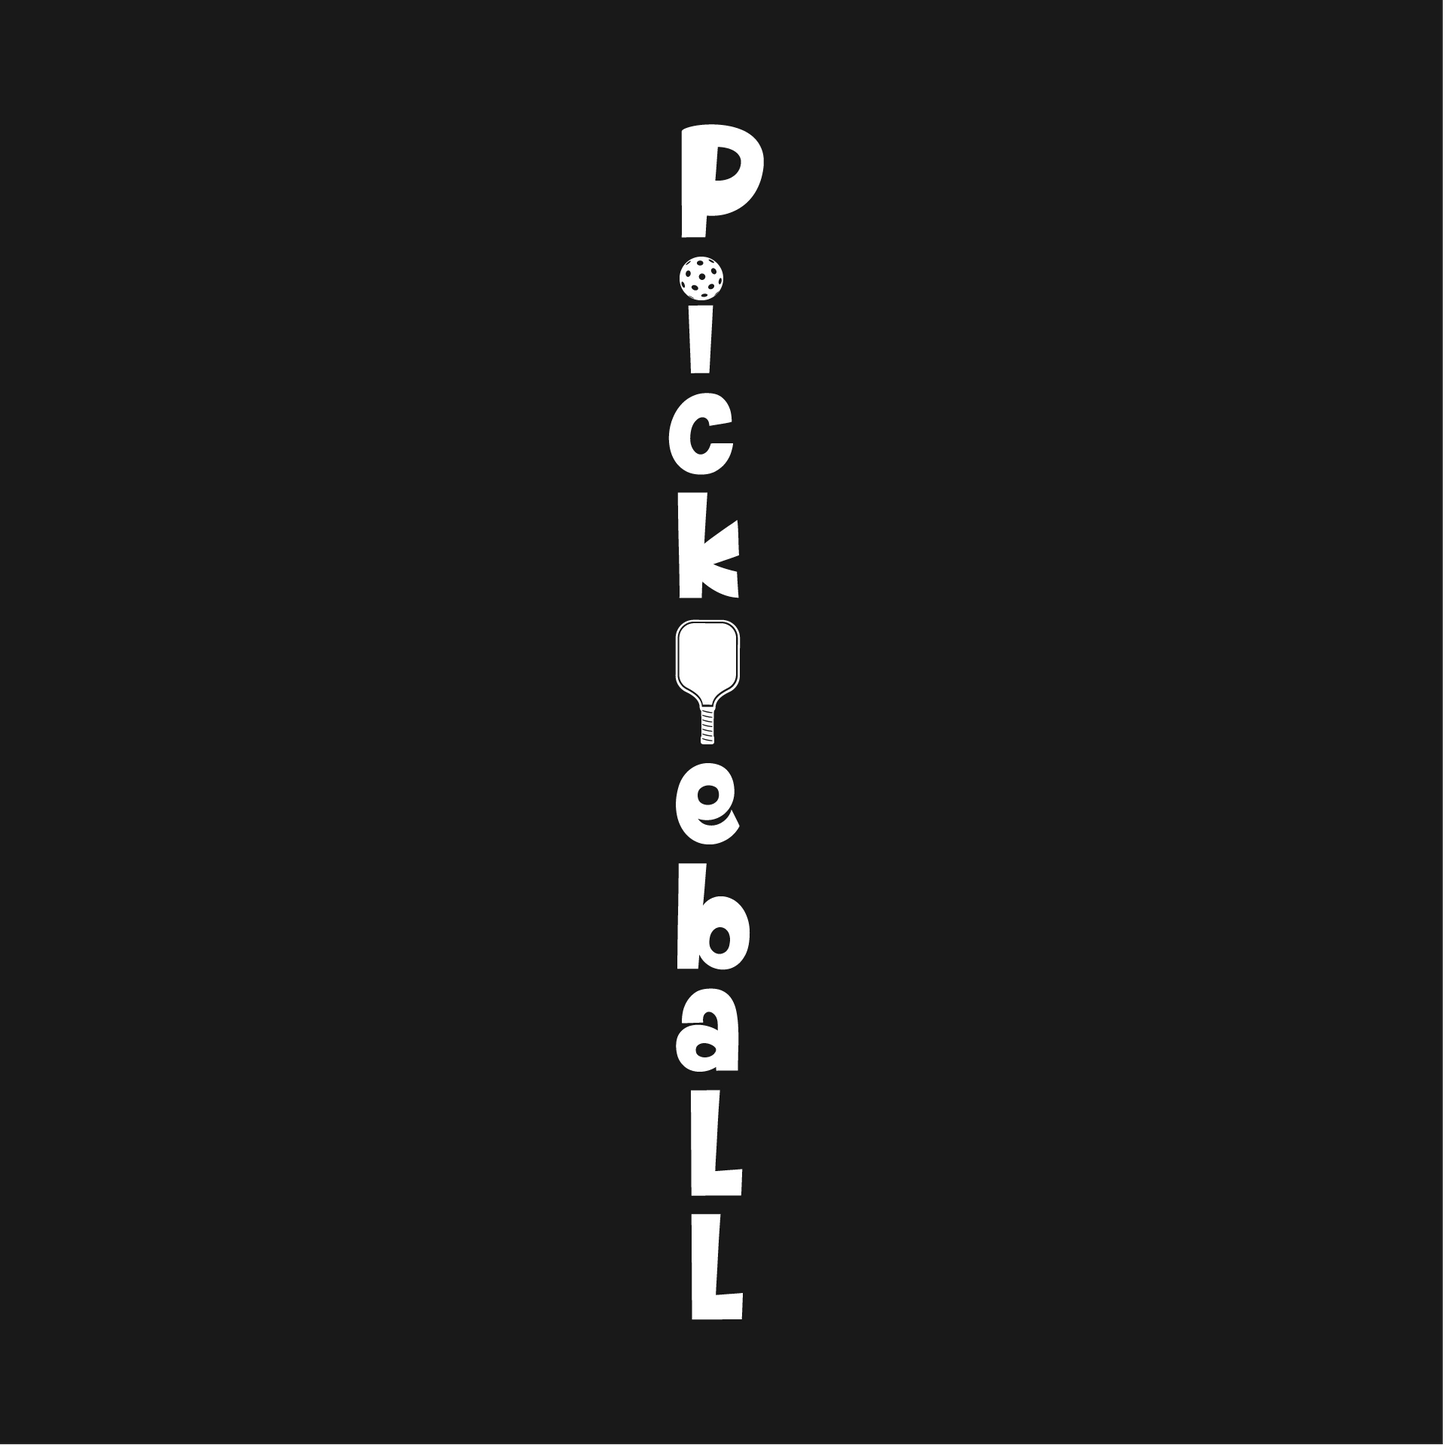 401 Rhode Island Pickleball Club | Women’s Fitted Hoodie Pickleball Sweatshirt | 50% Cotton 50% Poly Fleece